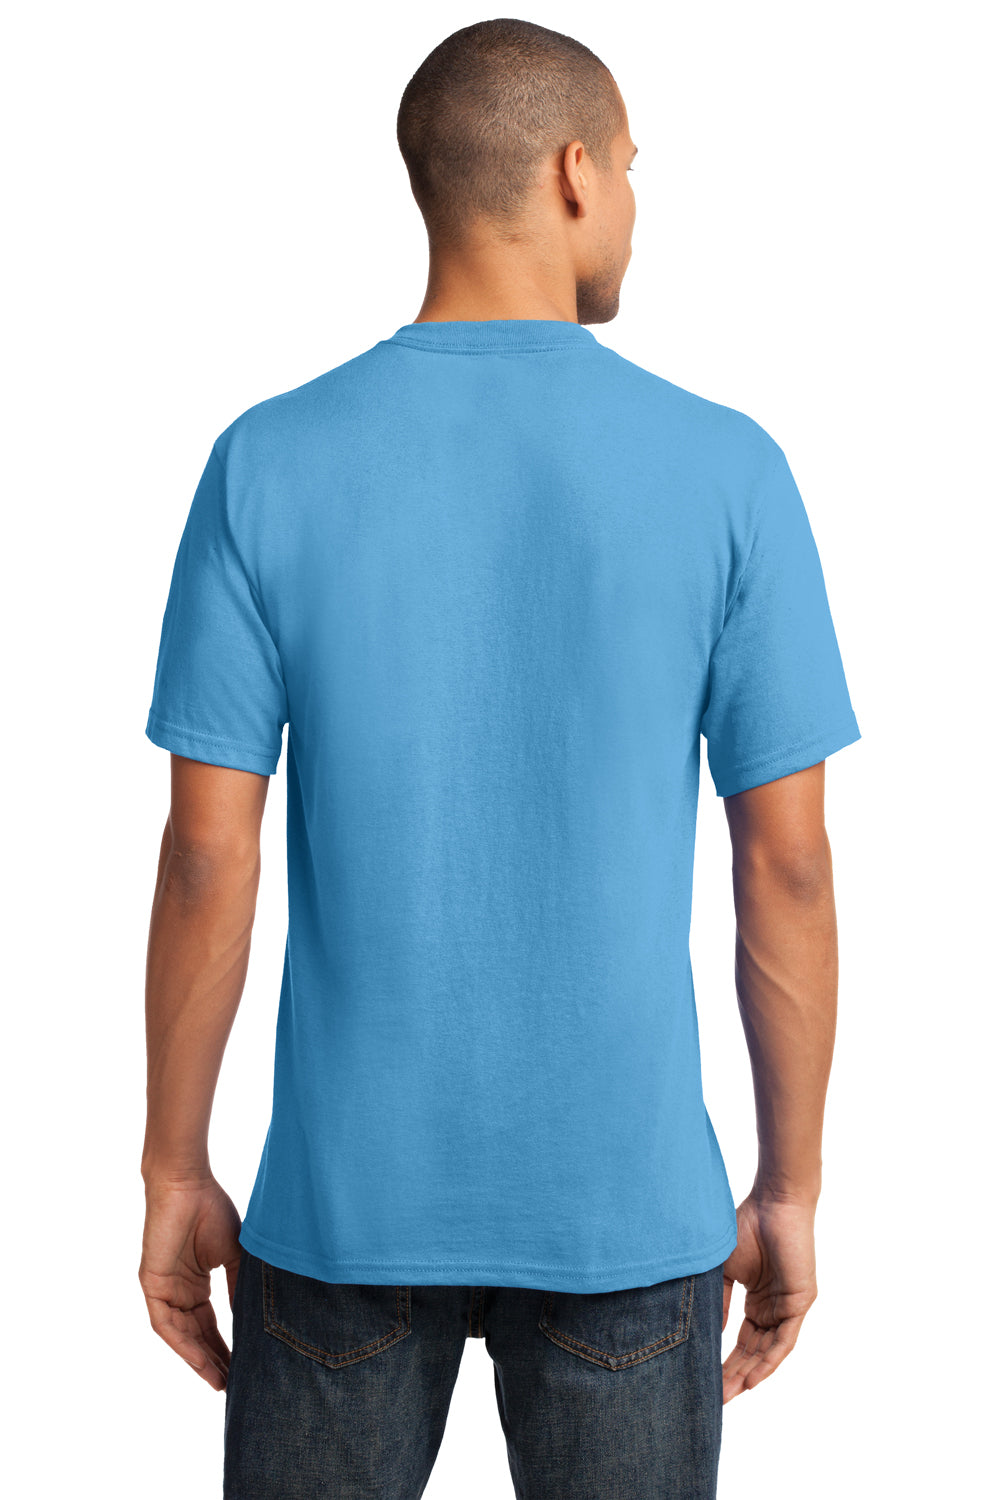 Port & Company PC54V Mens Core Short Sleeve V-Neck T-Shirt Aqua Blue Back